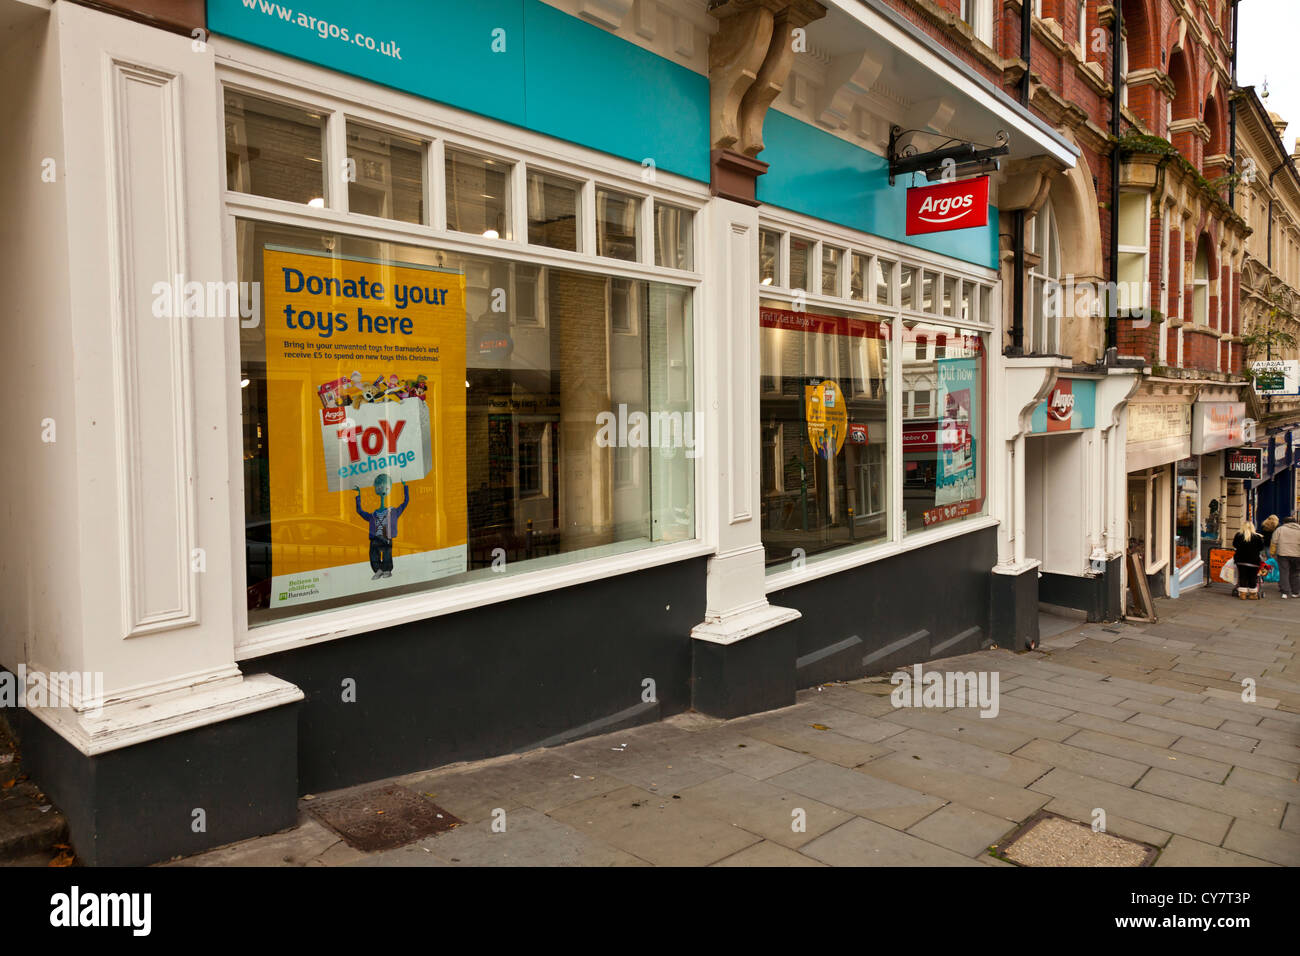 Argos retail store shop premises, city center centre location, Newport, Wales, UK, GB. Stock Photo